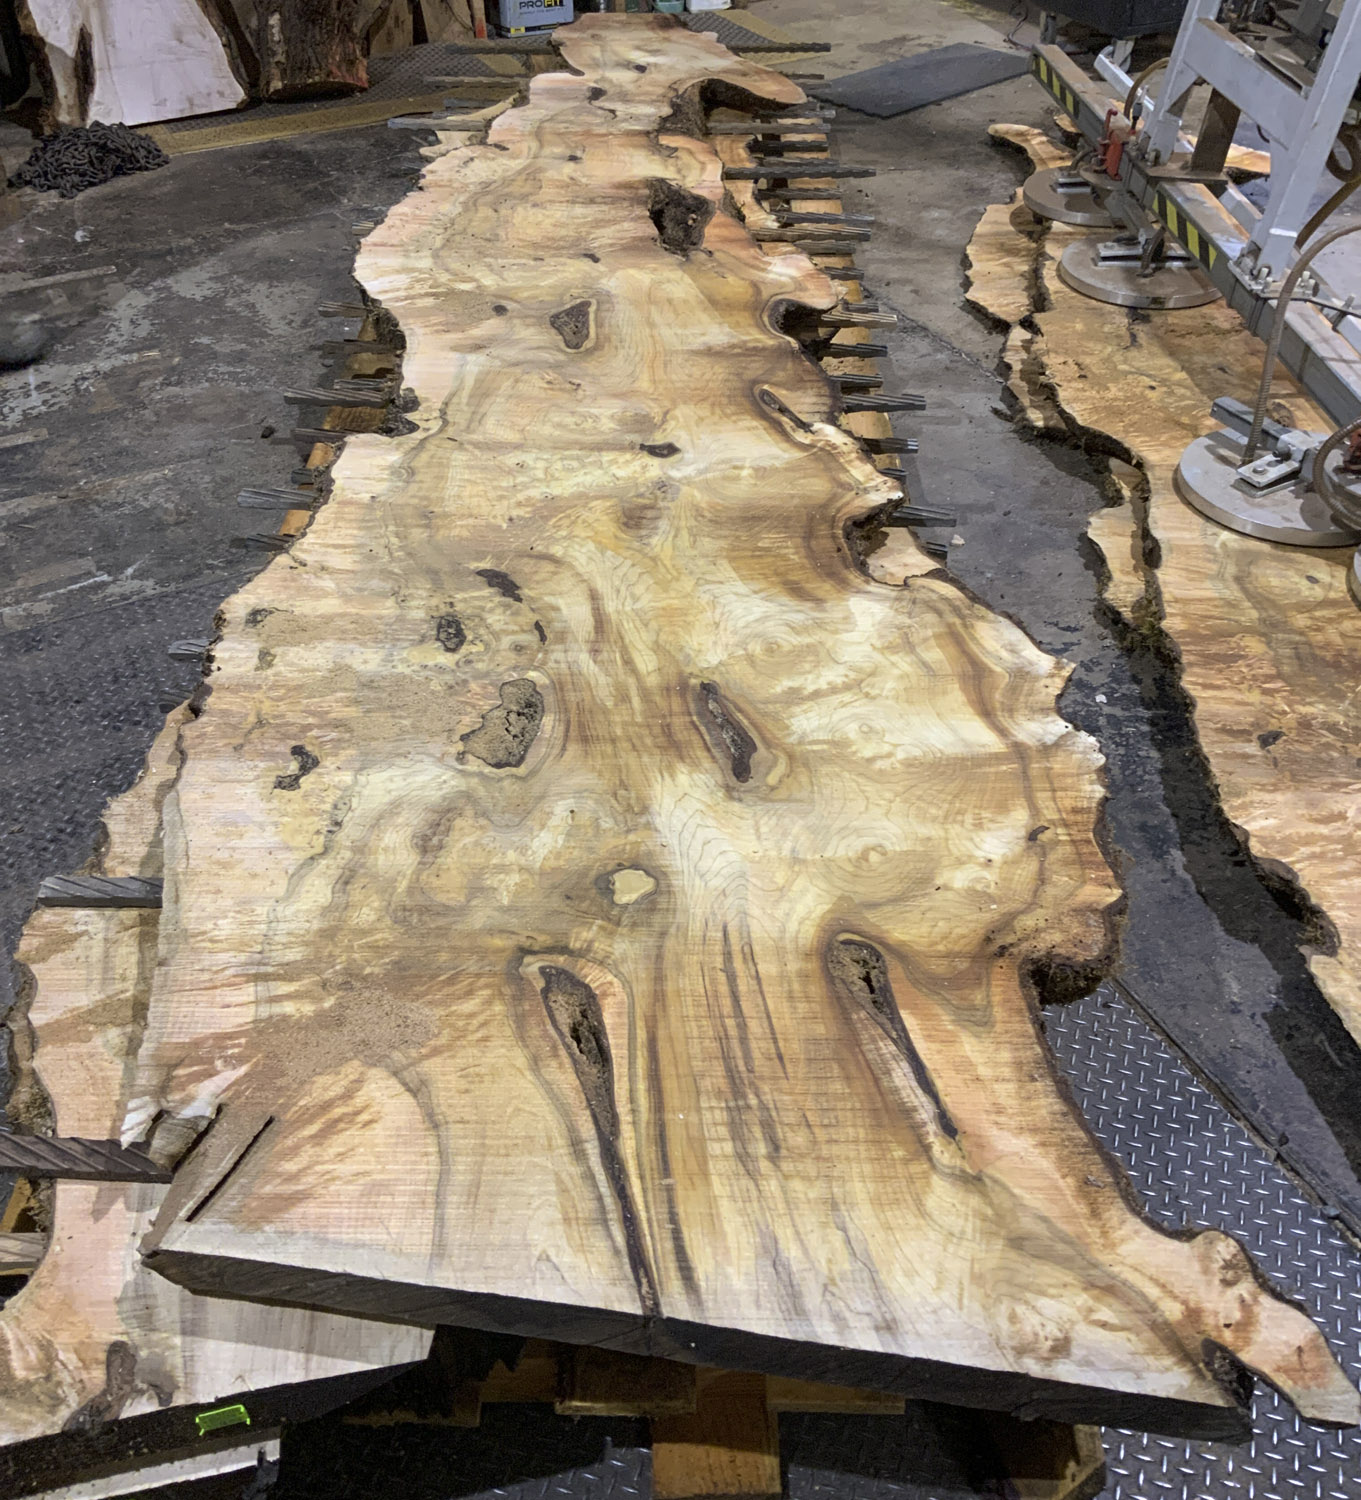 Buy Figured American Myrtle slabs at Hearne Hardwoods Inc.